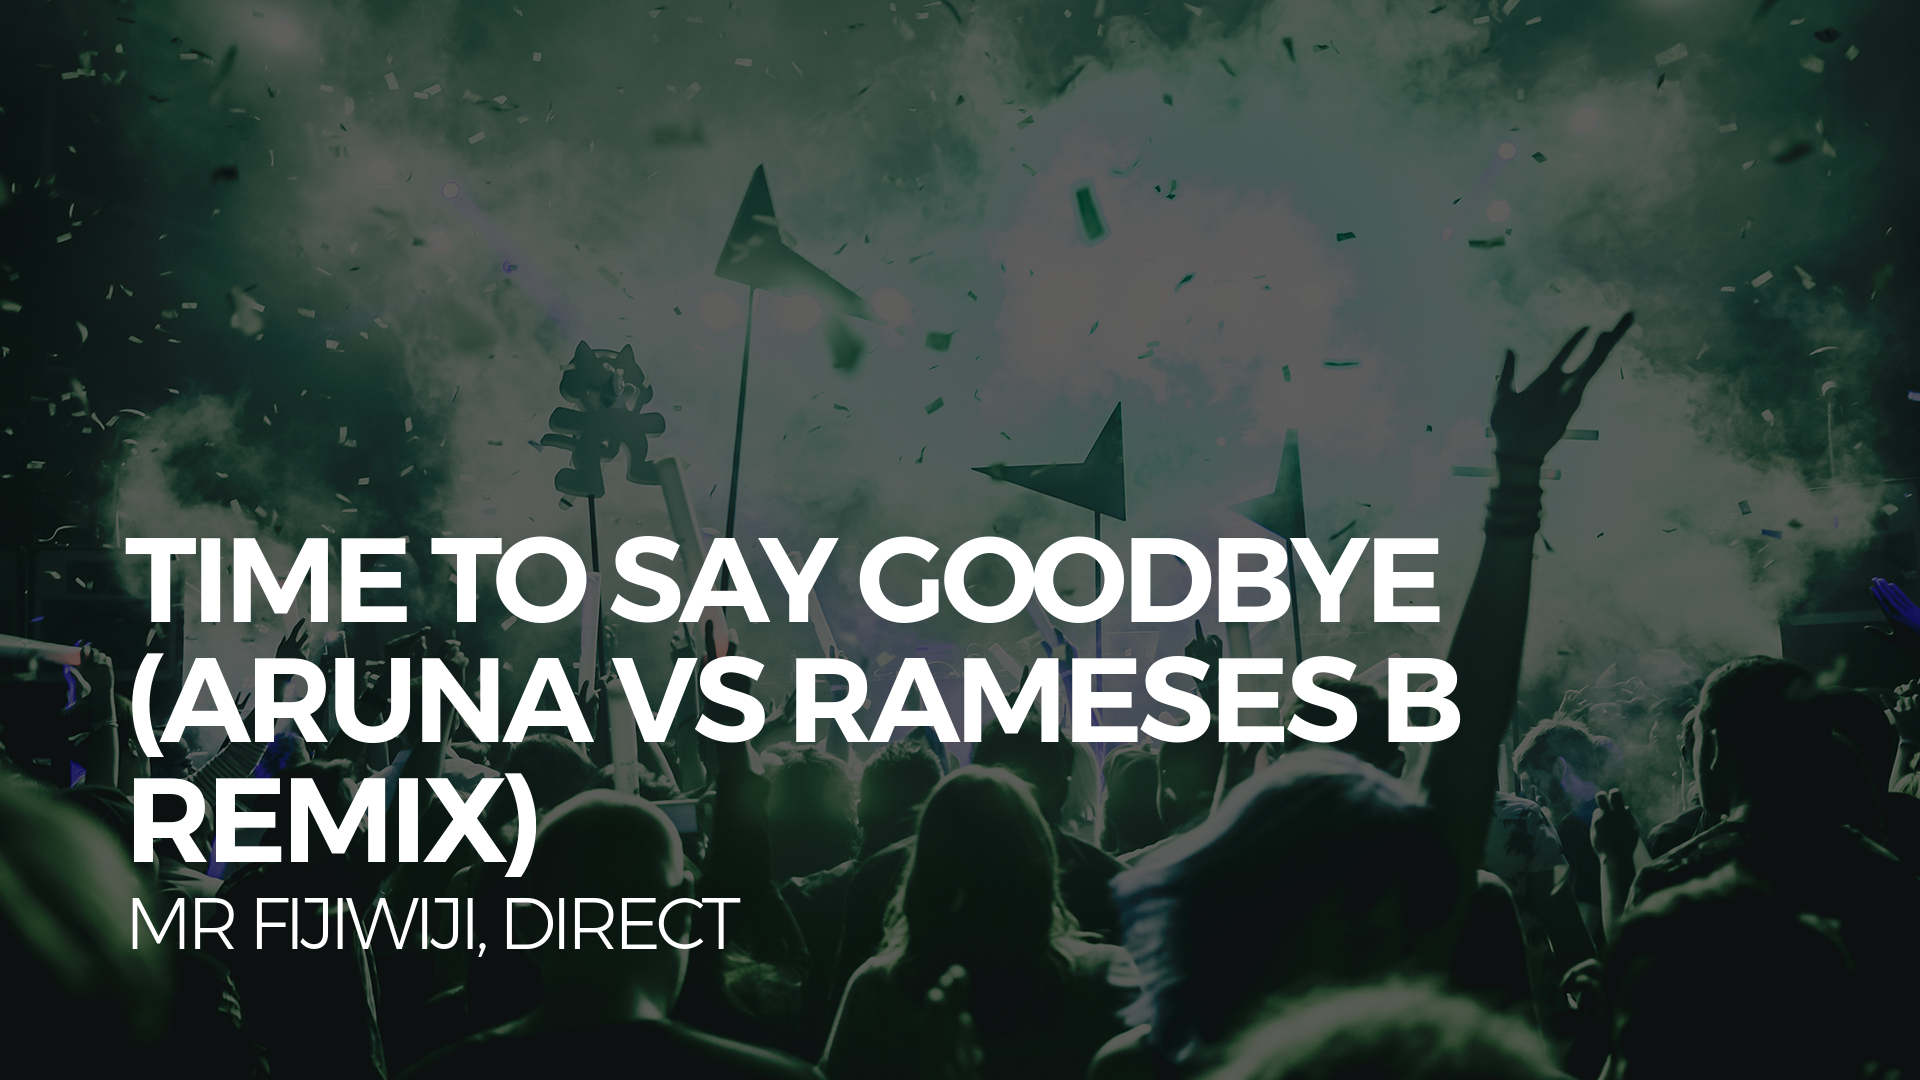 Mr FijiWiji, Direct & ARUNA - Time To Say Goodbye (ARUNA vs Rameses B Remix) [Monstercat Release]